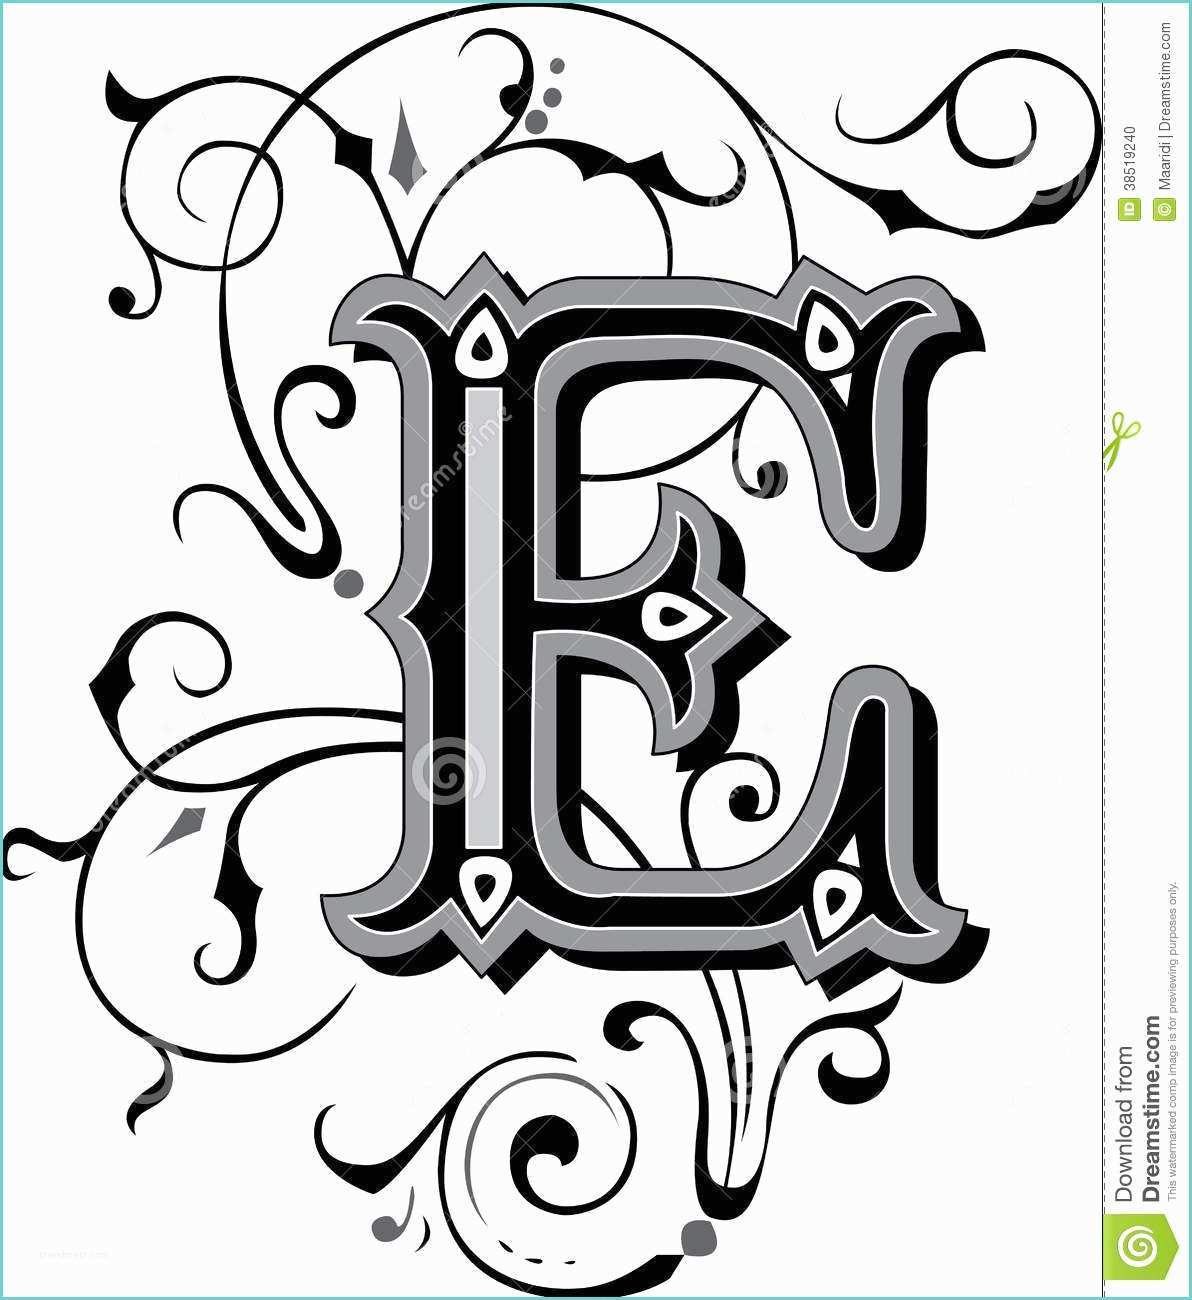 Fancy Letter E Images Fancy Alphabets Letters Search Results